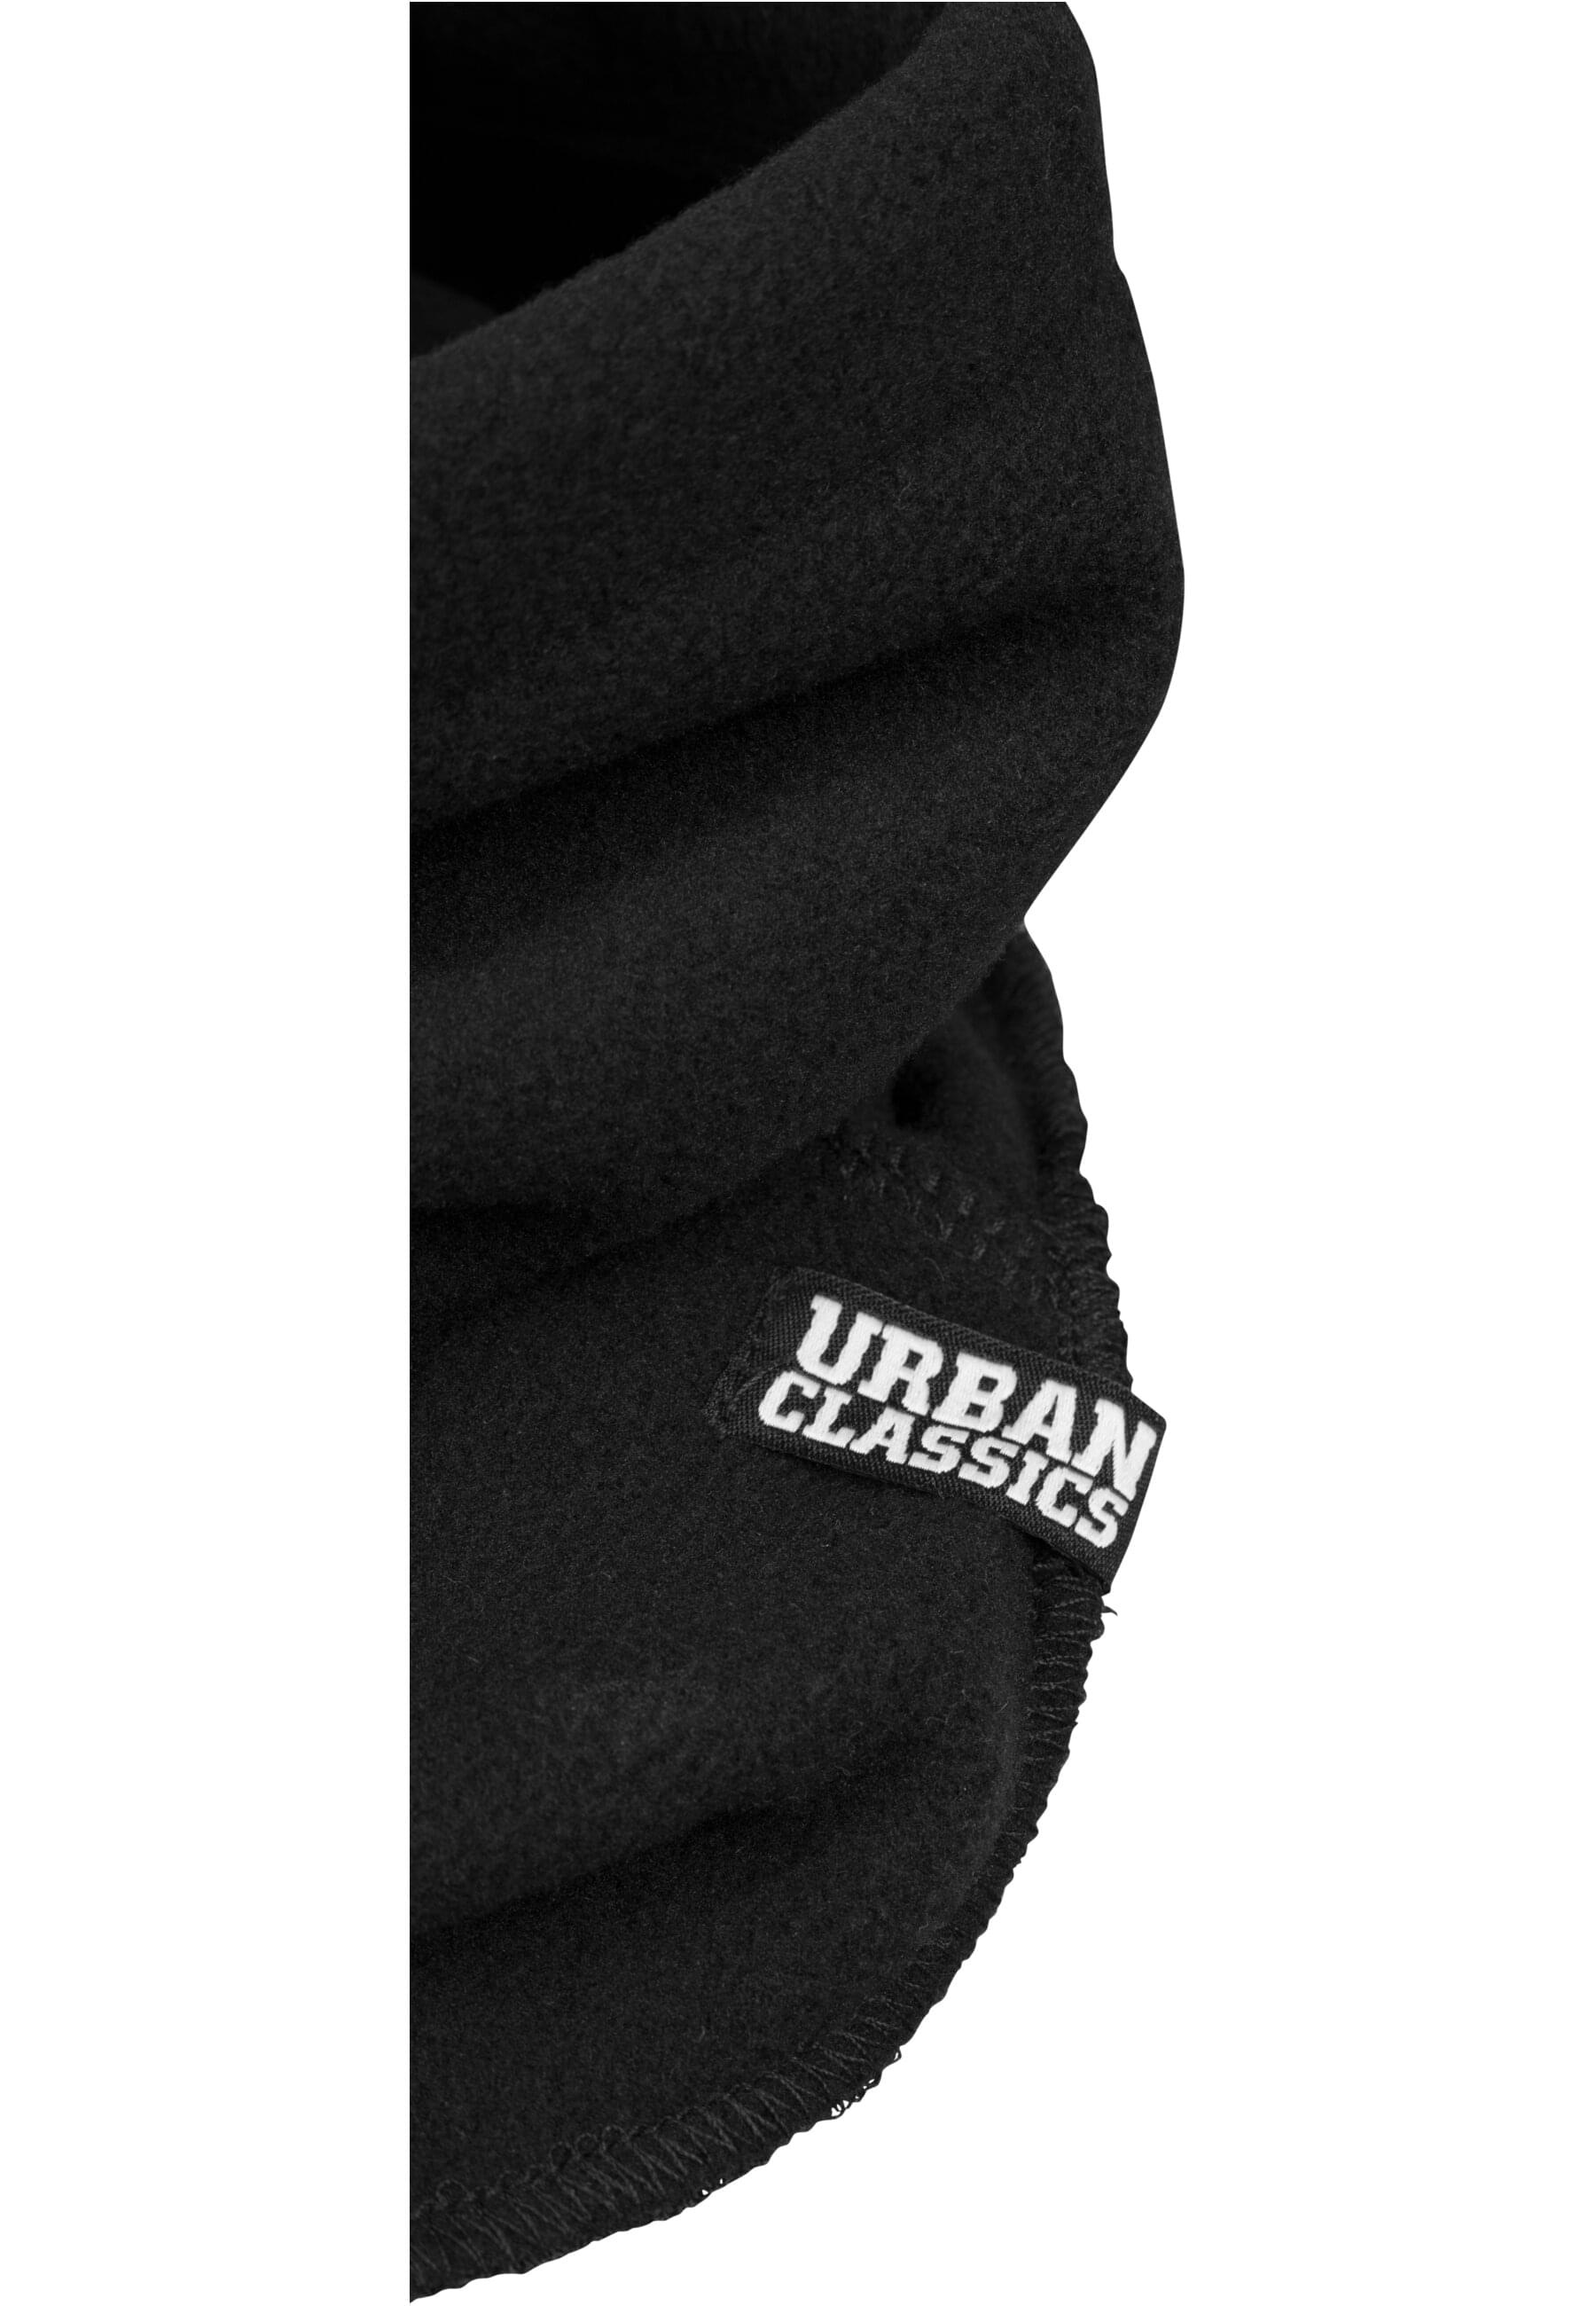 URBAN CLASSICS Schal »Urban Classics Unisex Polar Fleece Neck Gaiter«, (1 St.)